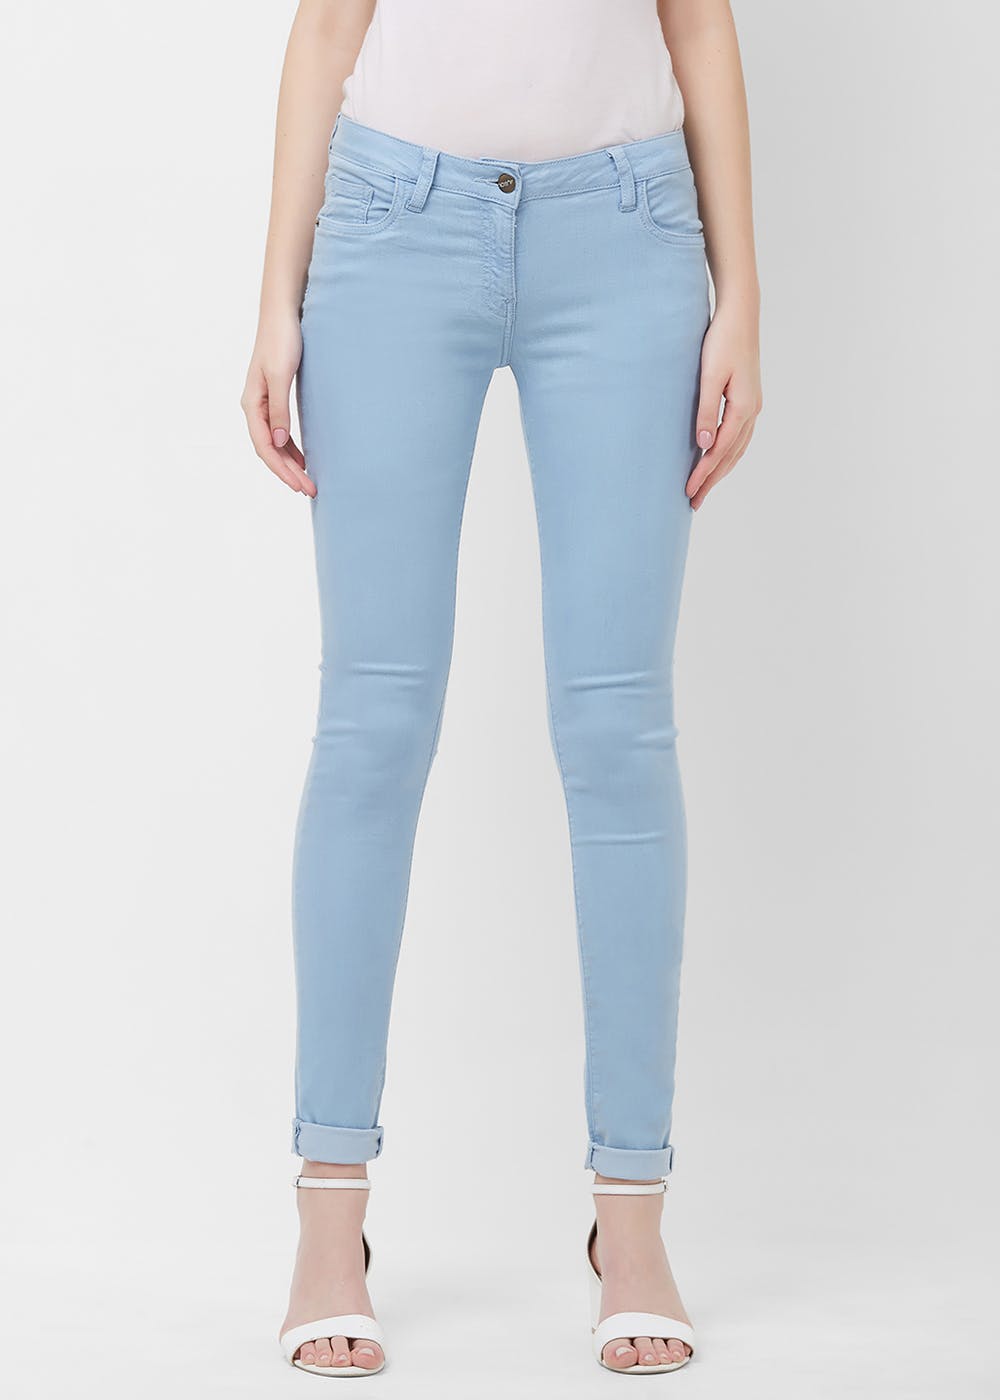 skinny fit blue jeans